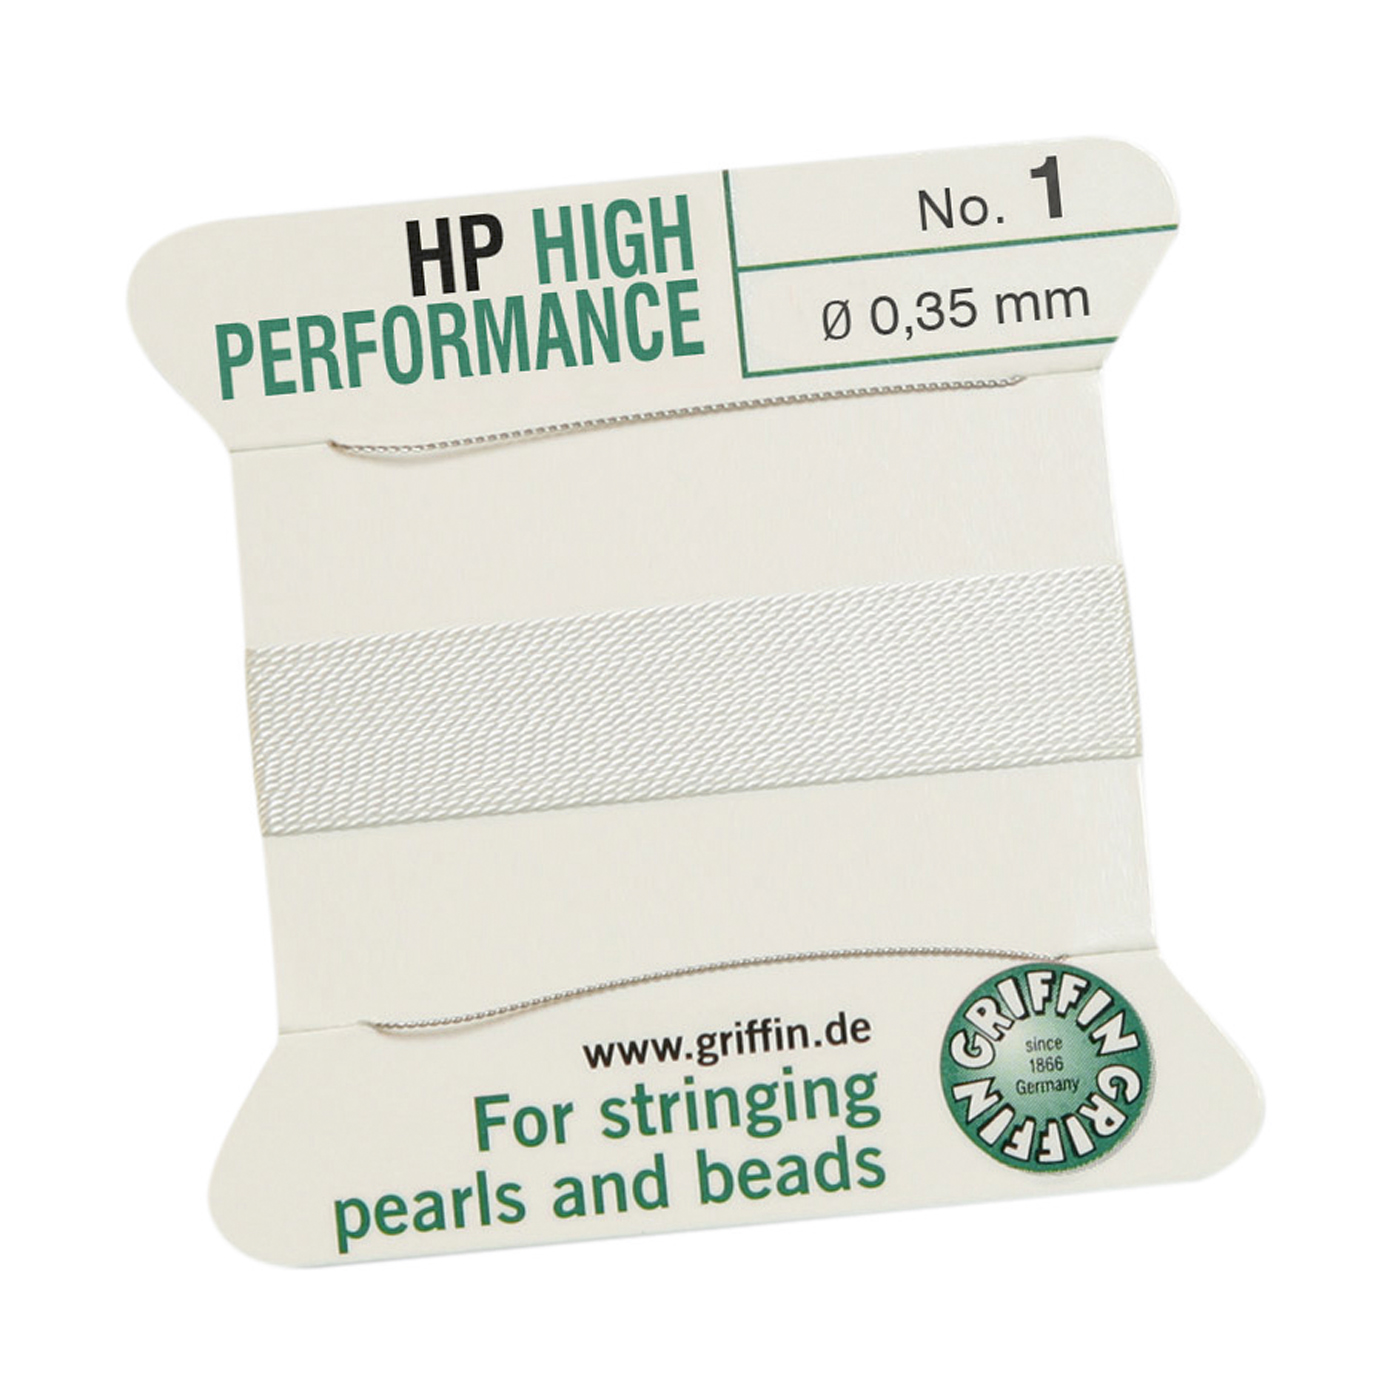 Bead Cord High Performance Perlseide, weiß, 2 Nadeln, Nr. 1 - 2 m